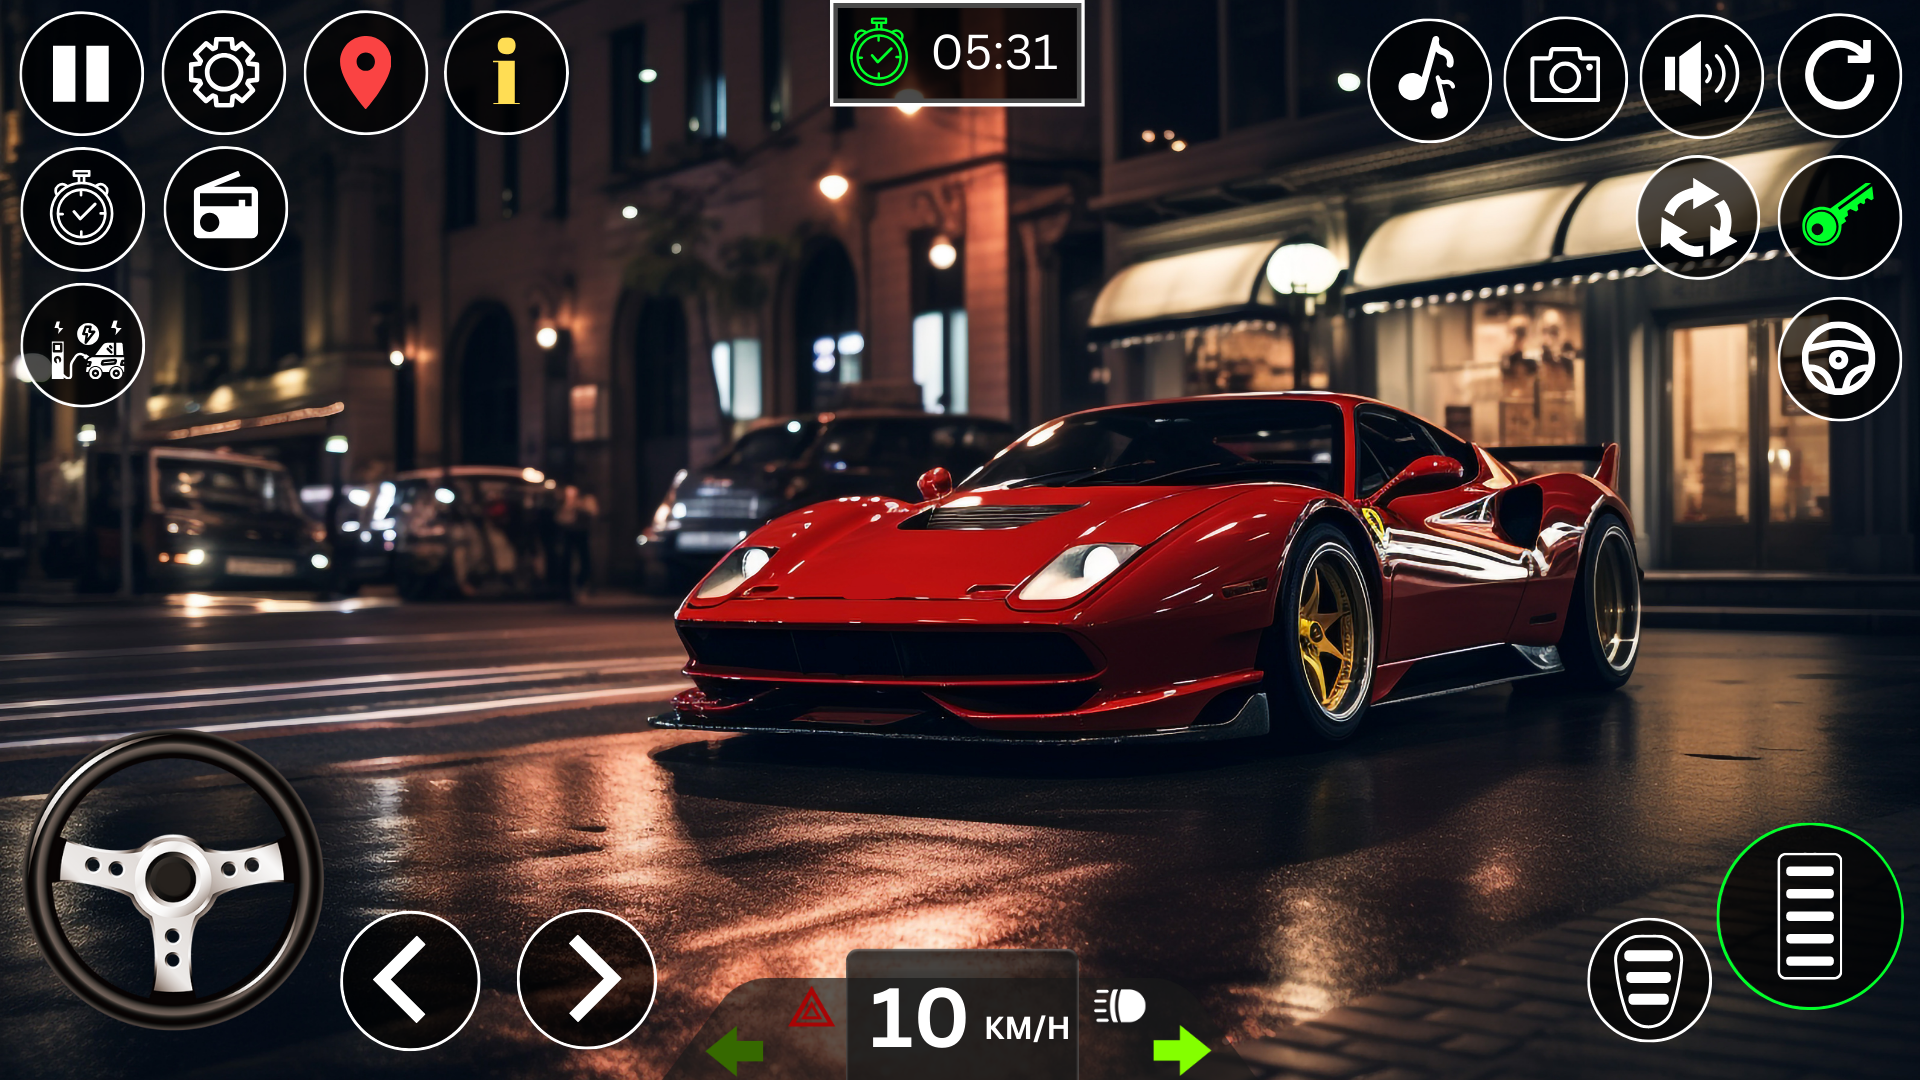 Screenshot 1 of Auto Simulatore Maestro Guida 1.0.41